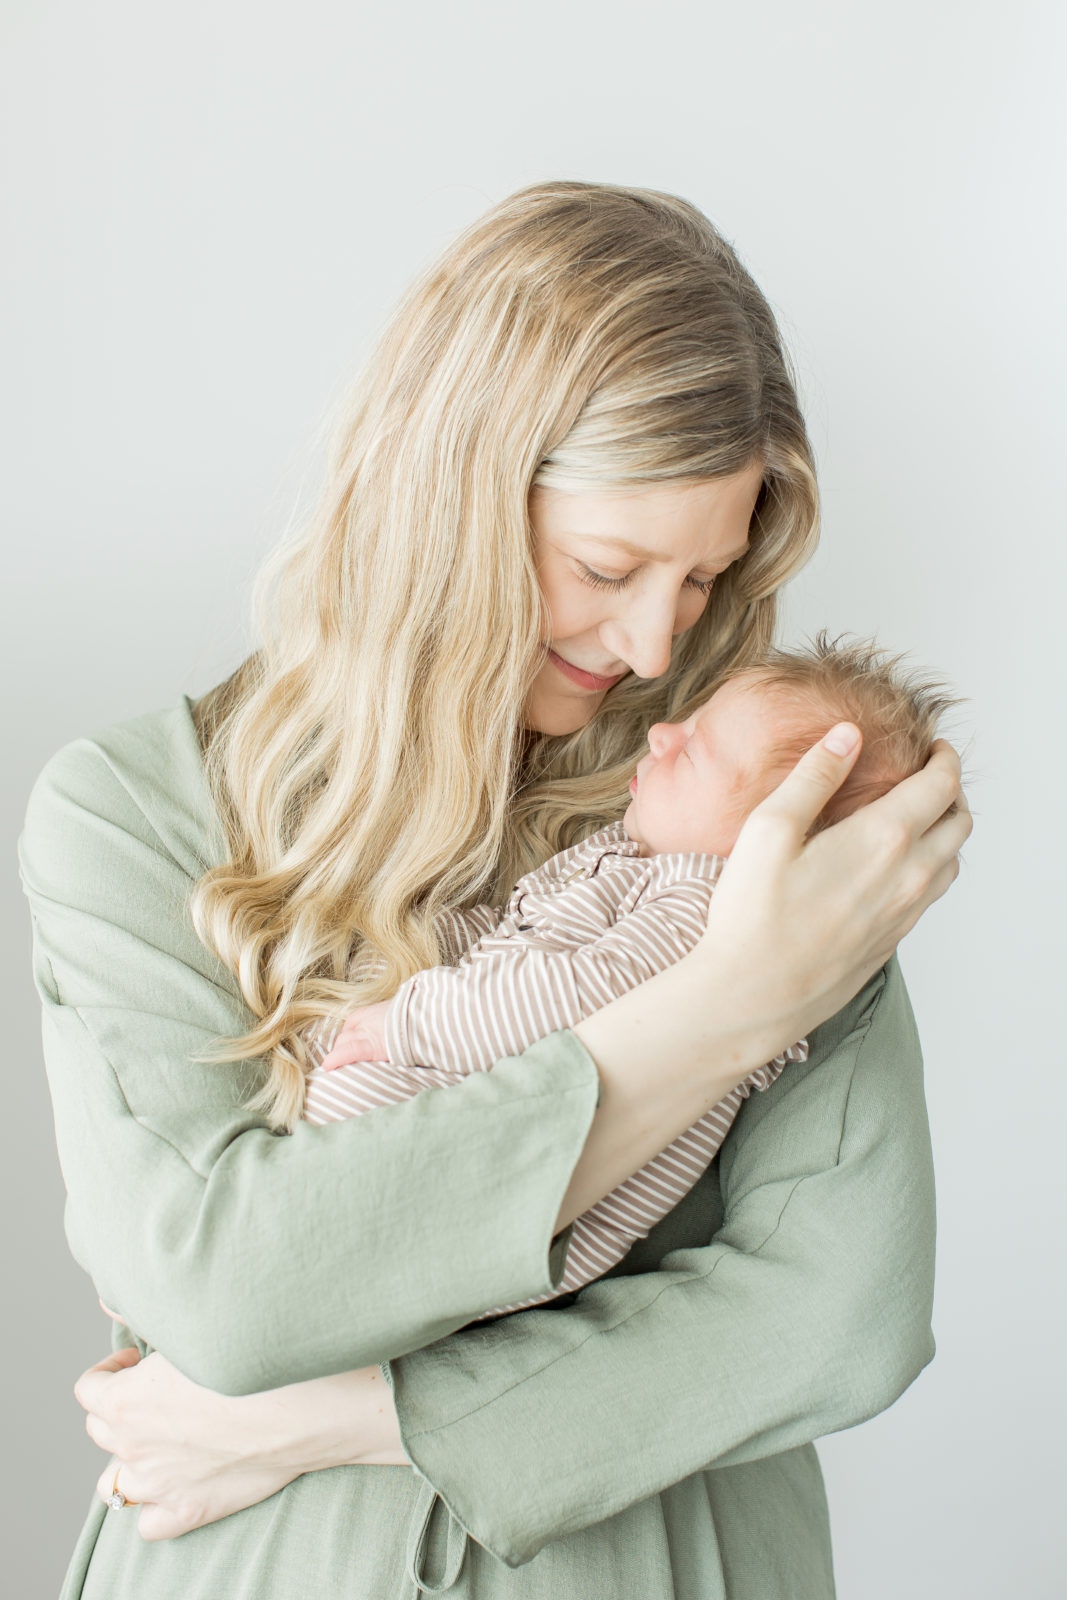 Fargo Moorhead Newborn Photography Baby Linden